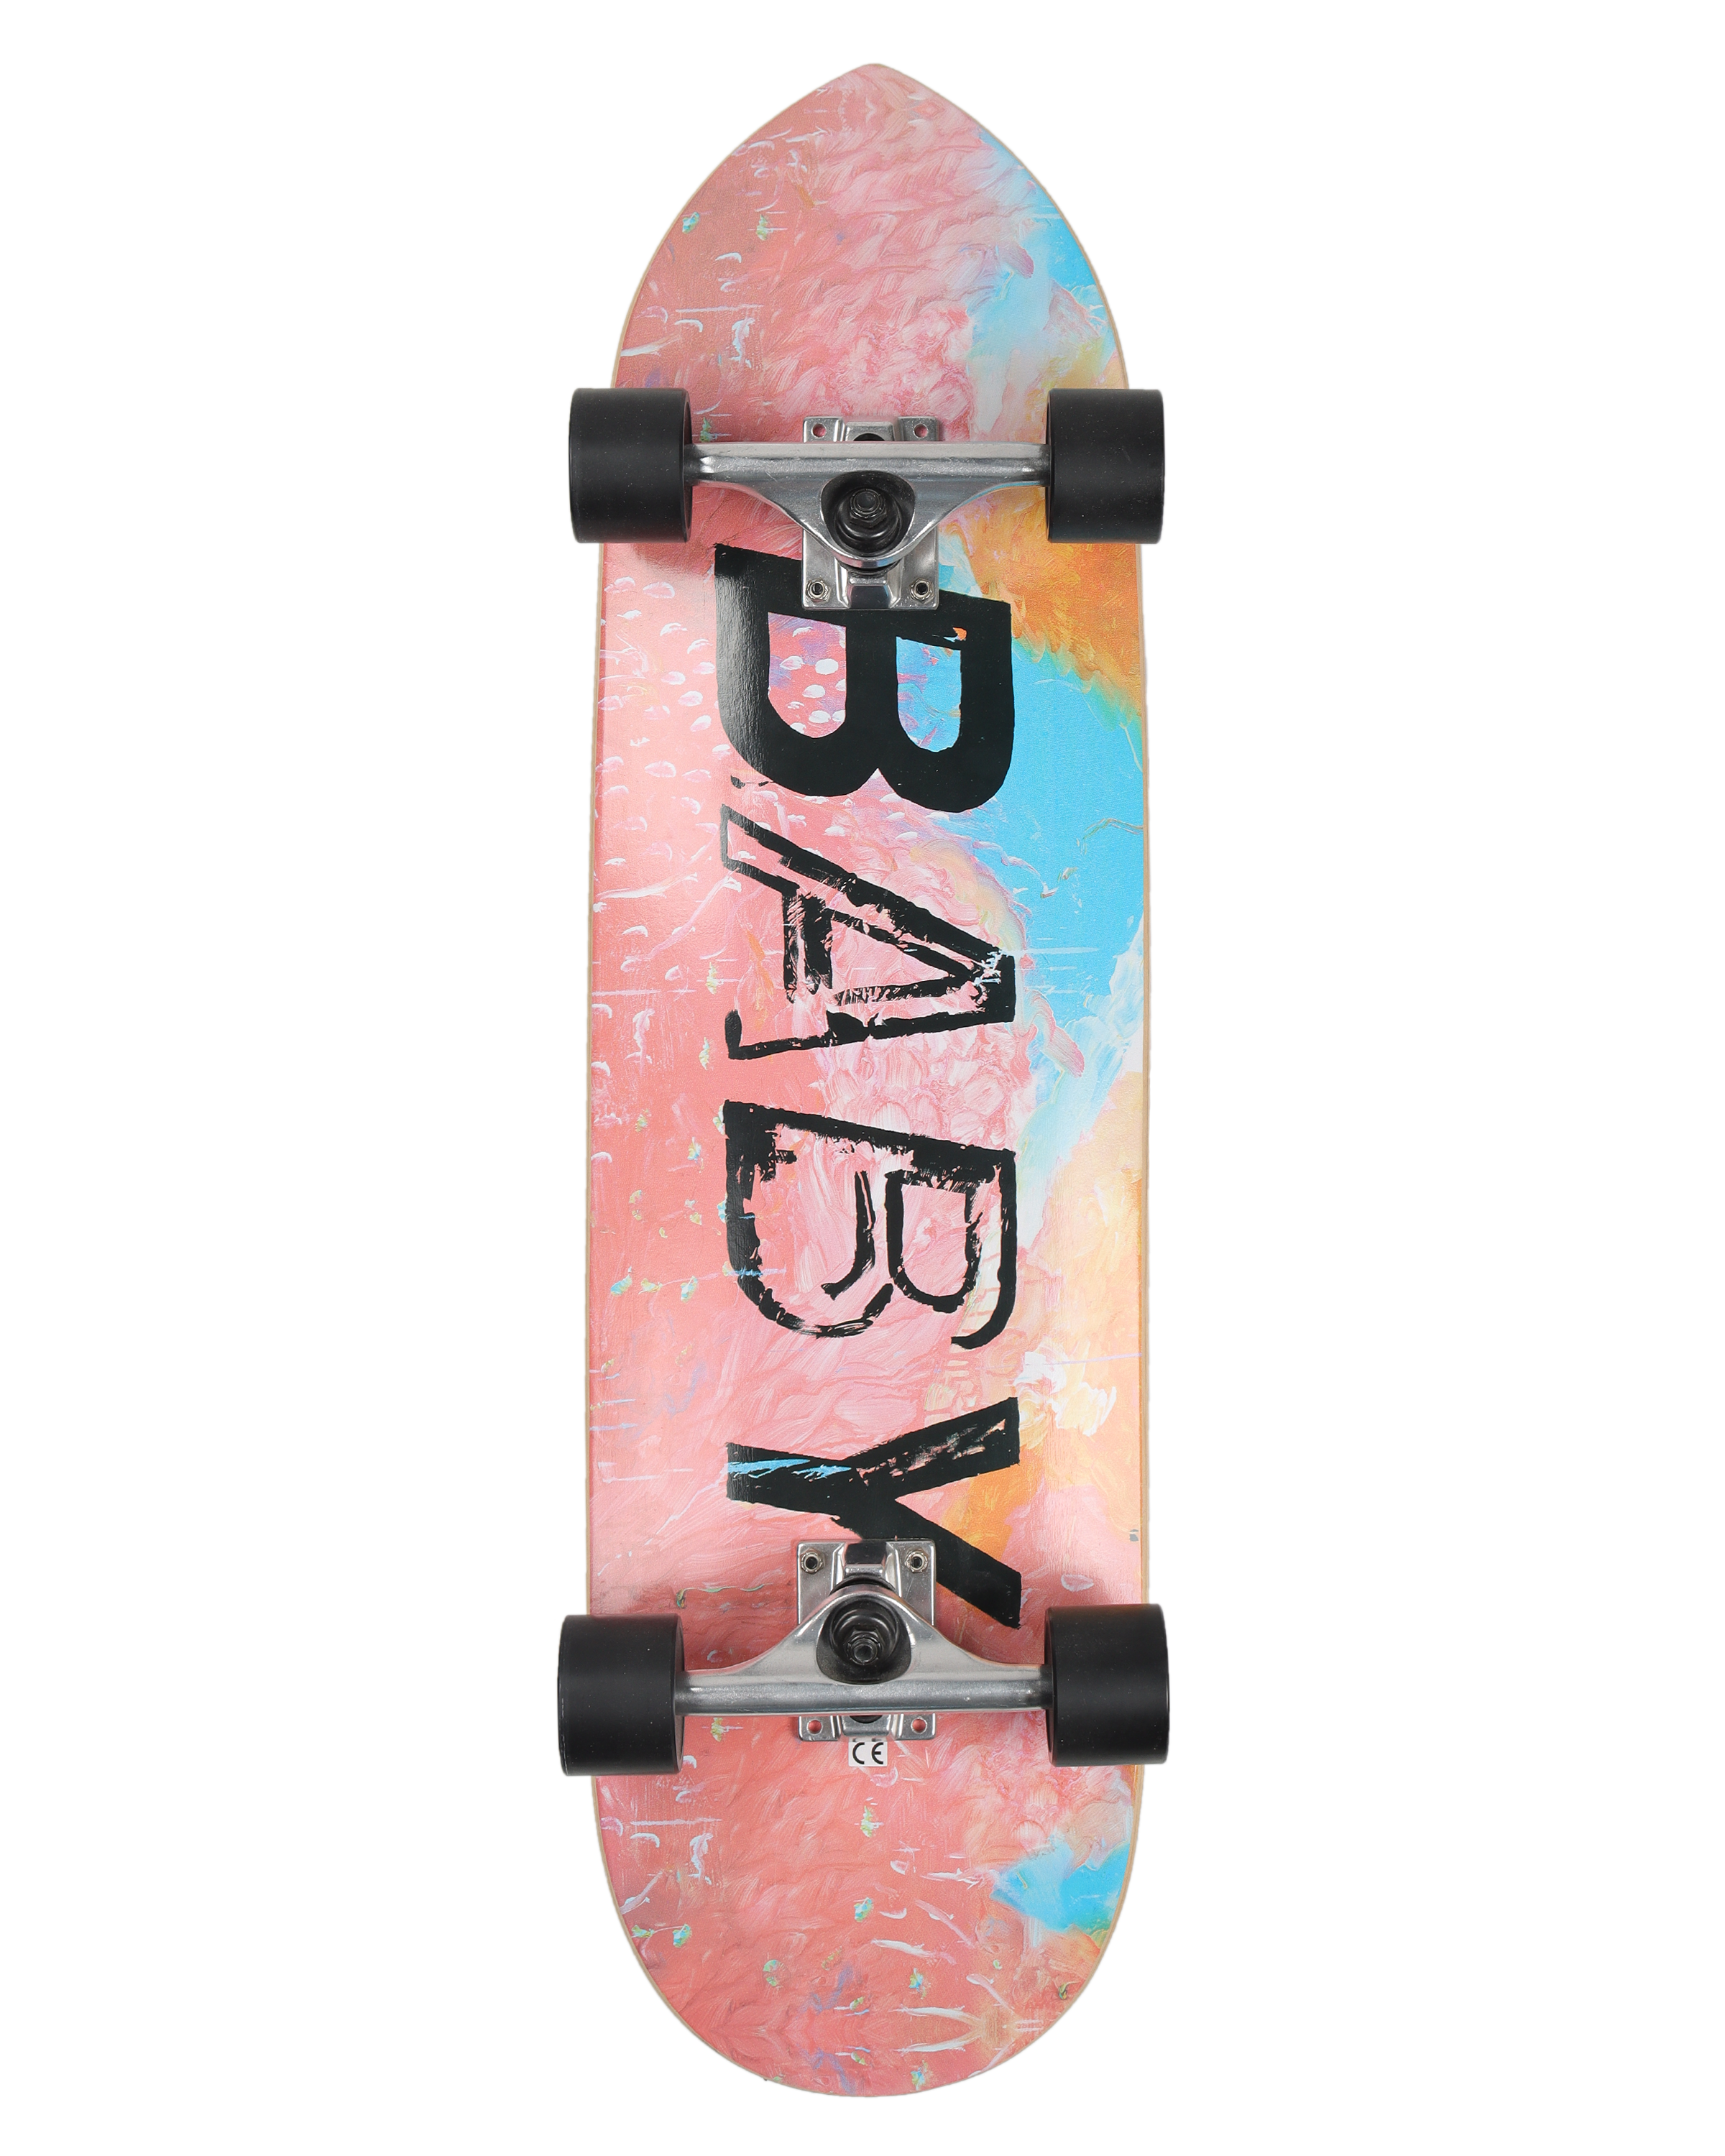 Saint Laurent Baby Complete Skateboard (2015)